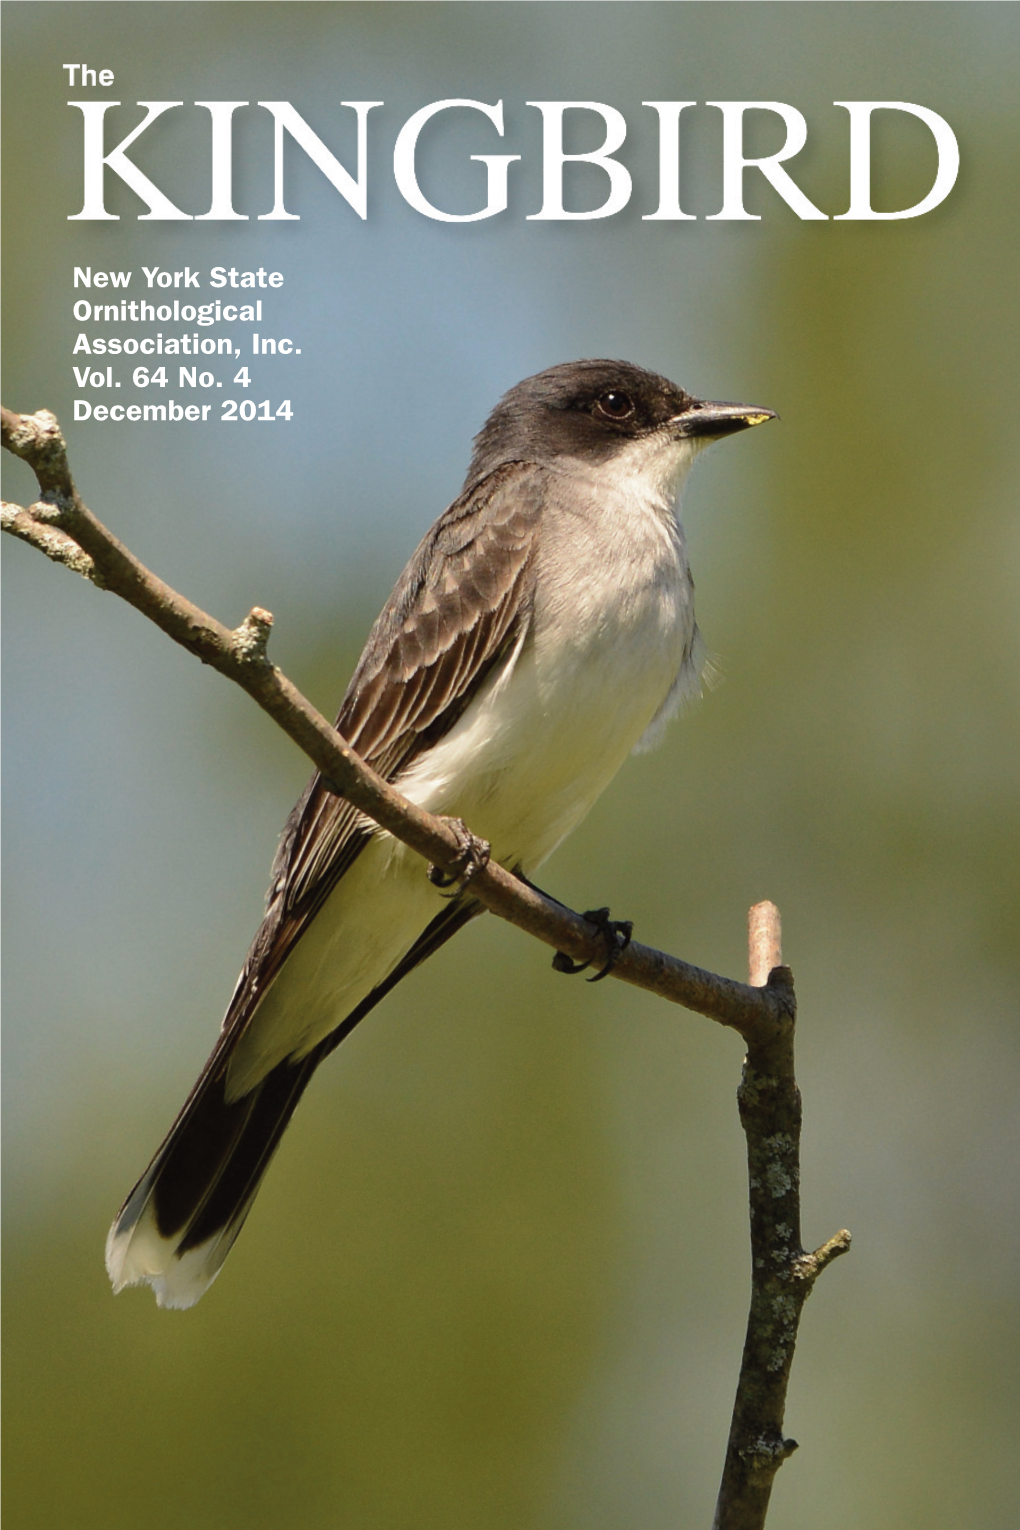 The Kingbird Vol. 64 No. 4 – December 2014